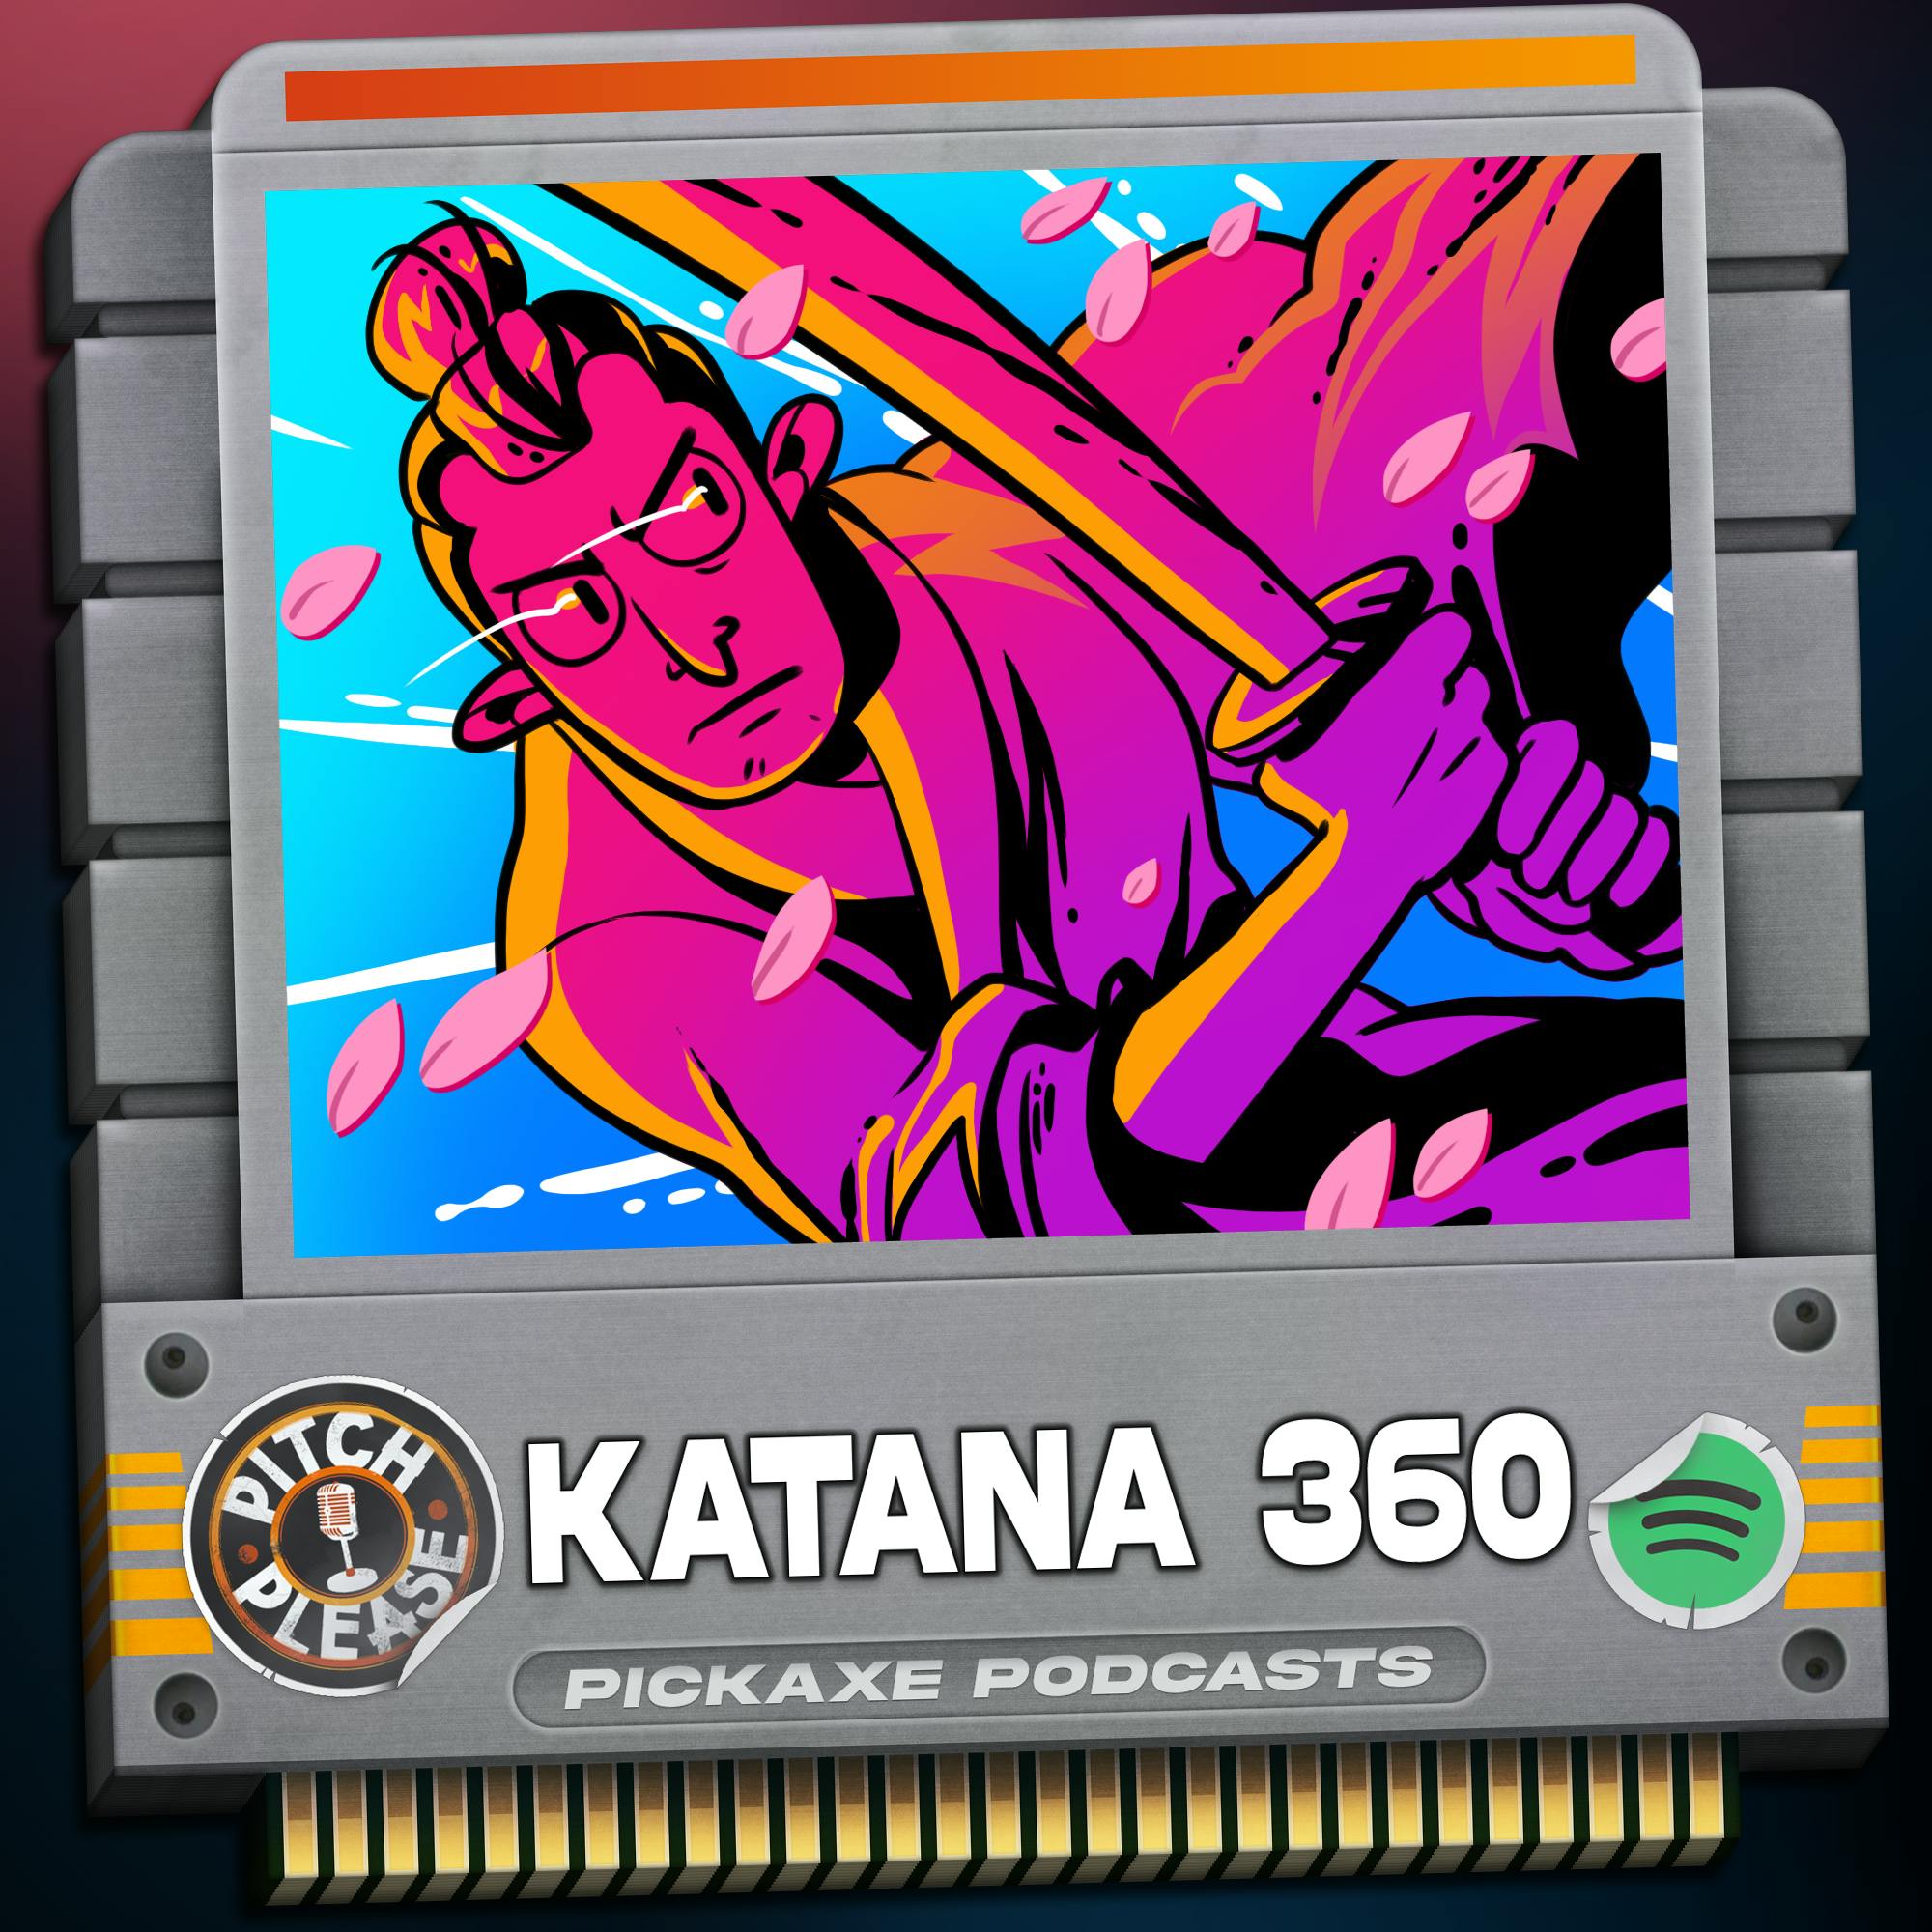 Pitch, Please - Katana 360